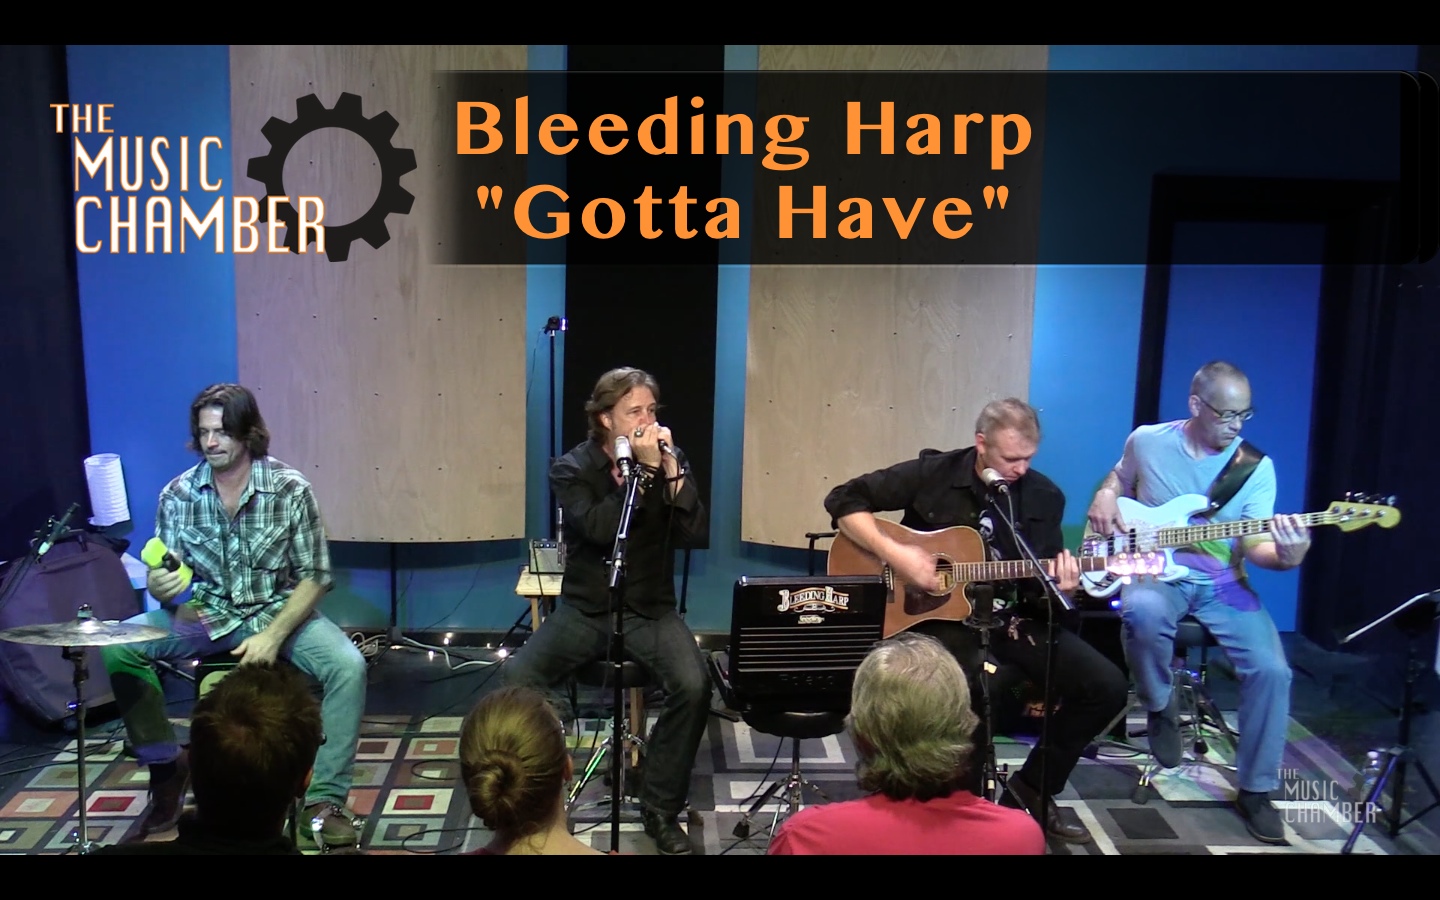 Bleeding Harp live on The Music Chamber at Ultimate Studios, inc